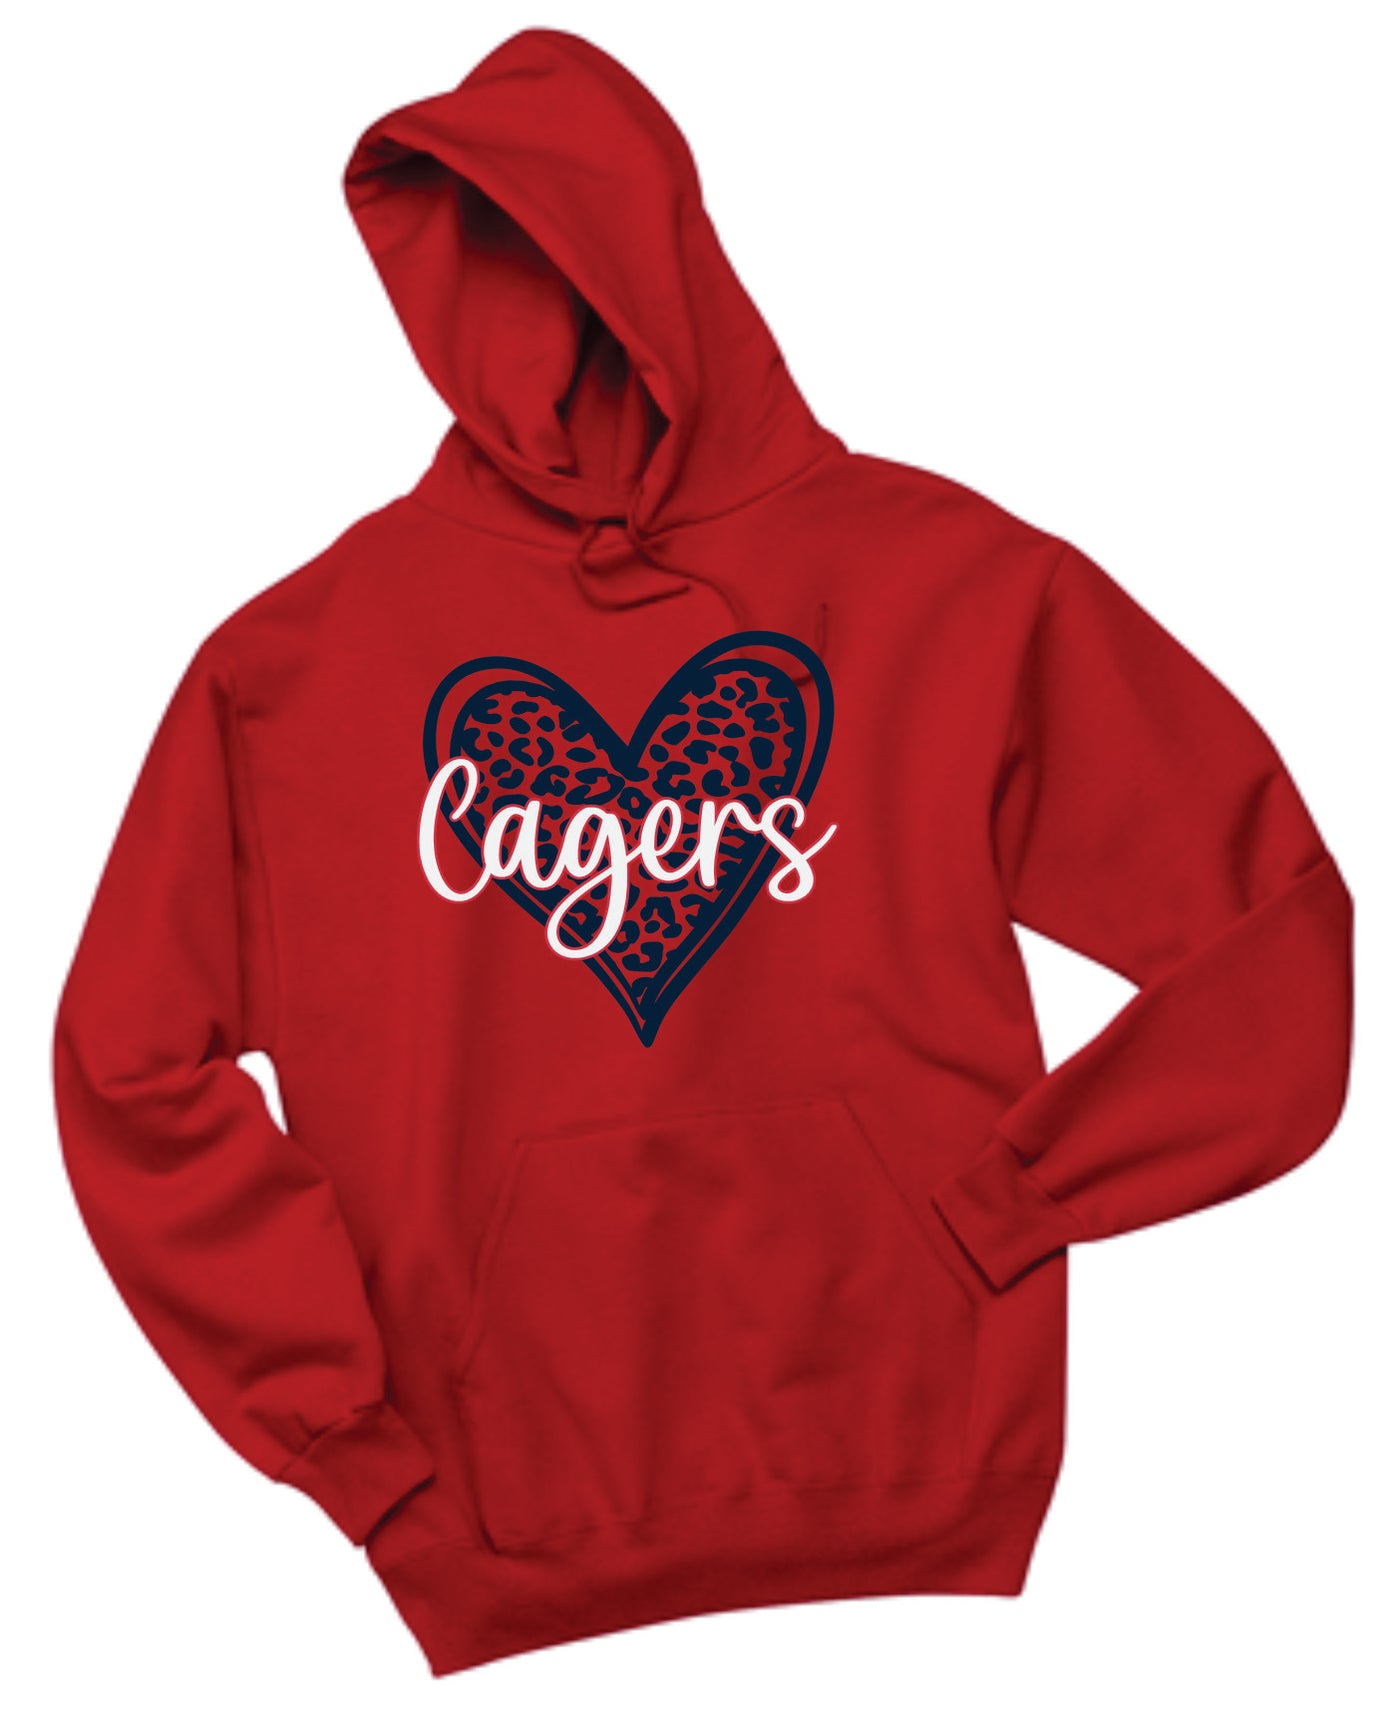 Cagers Basketball Leopard Heart Hooded Sweatshirt